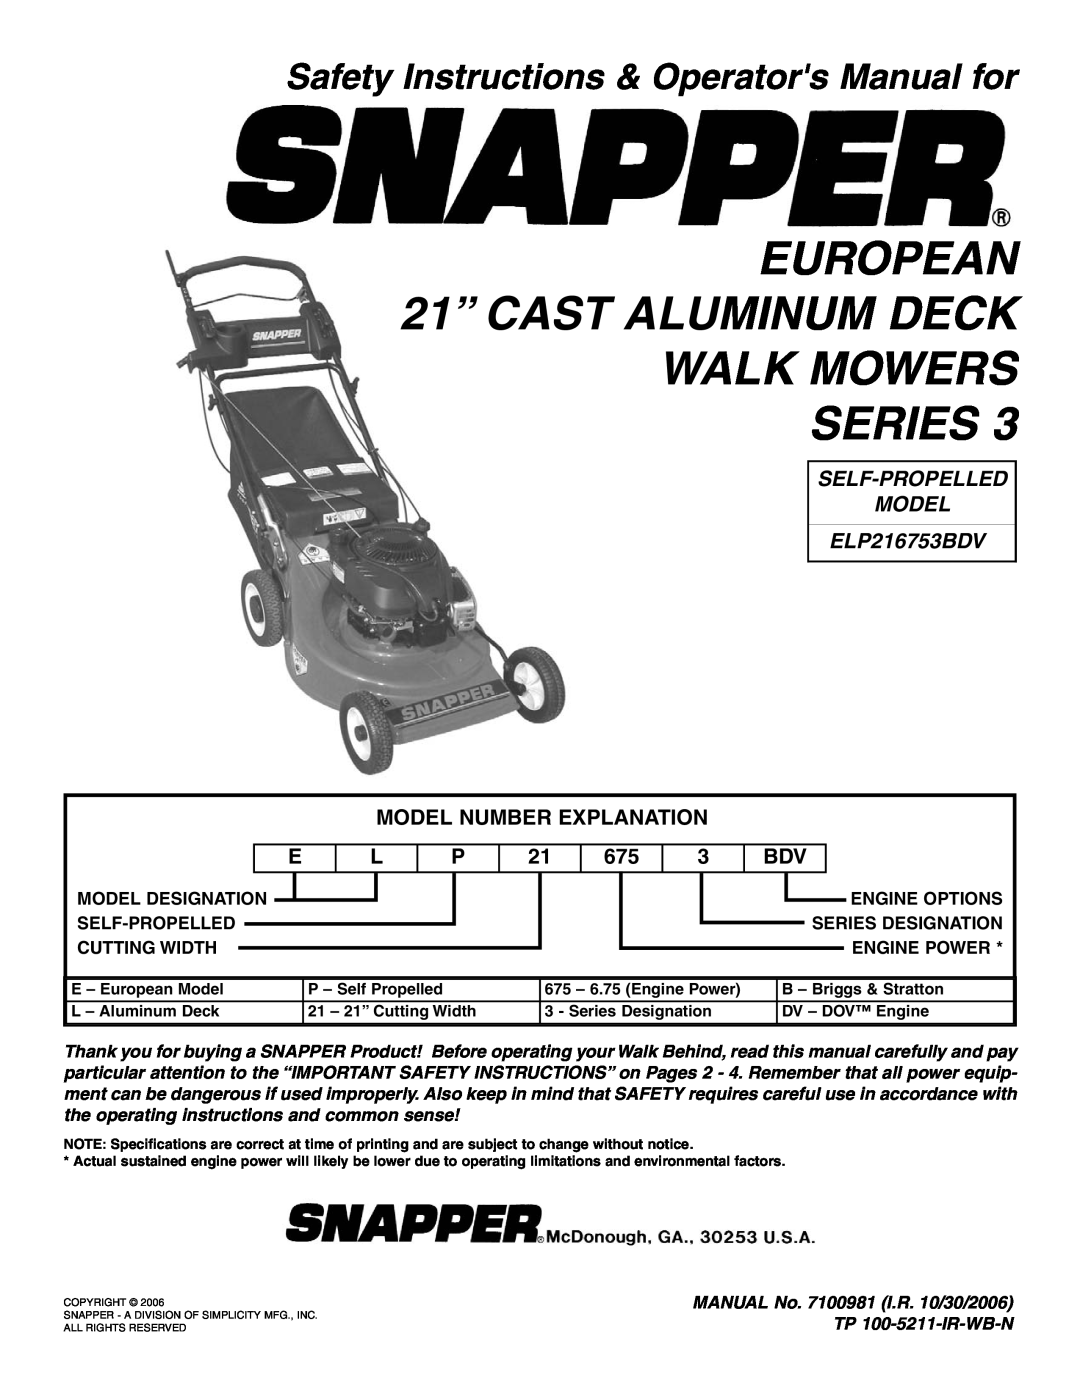 Snapper ELP216753BDV specifications EUROPEAN 21” CAST ALUMINUM DECK WALK MOWERS SERIES, Model Number Explanation 